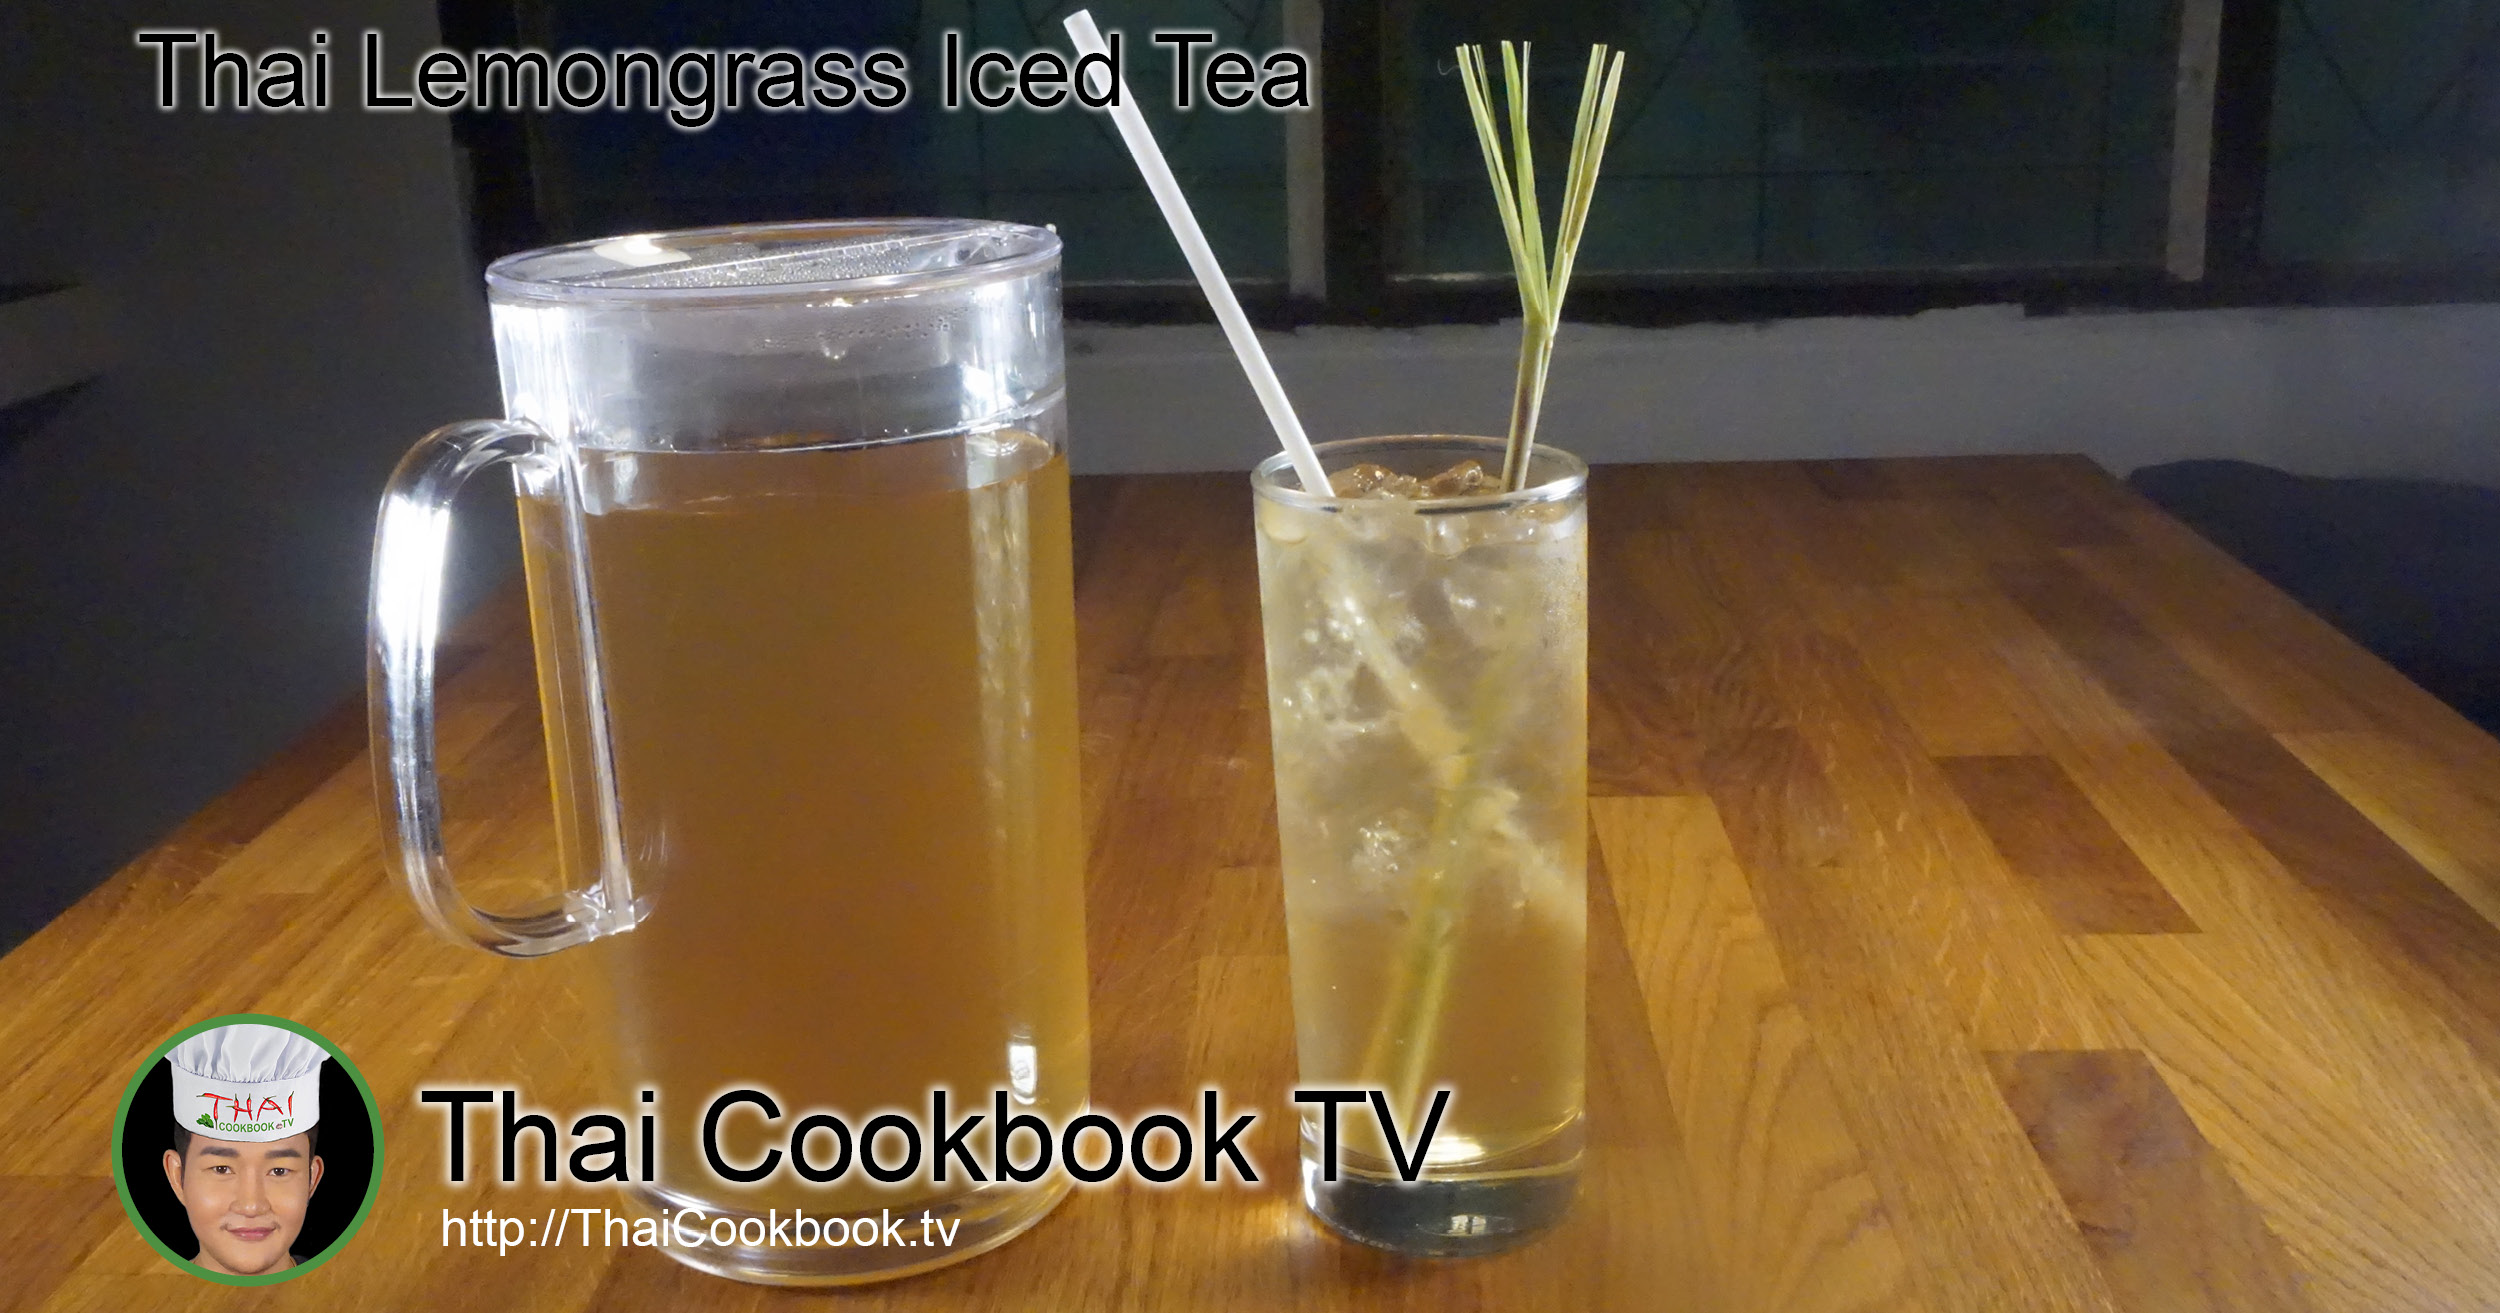 Authentic Thai Recipe for Lemongrass Tea